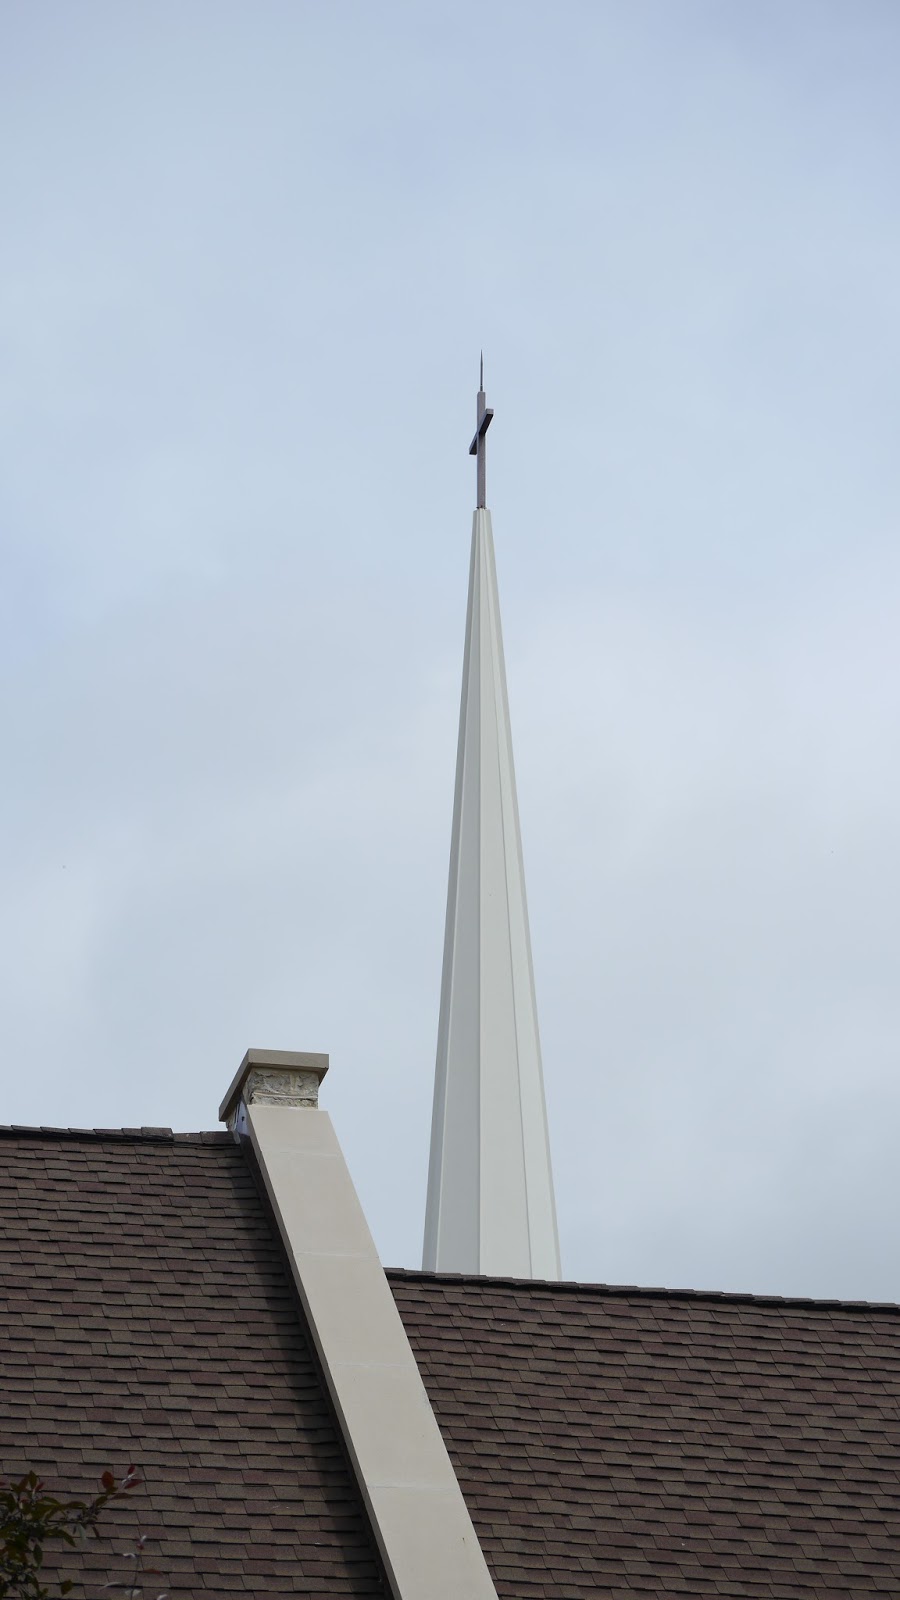 Grace Evangelical Lutheran Church | 700 Beechwood Ave, Waukesha, WI 53186, USA | Phone: (262) 547-3688